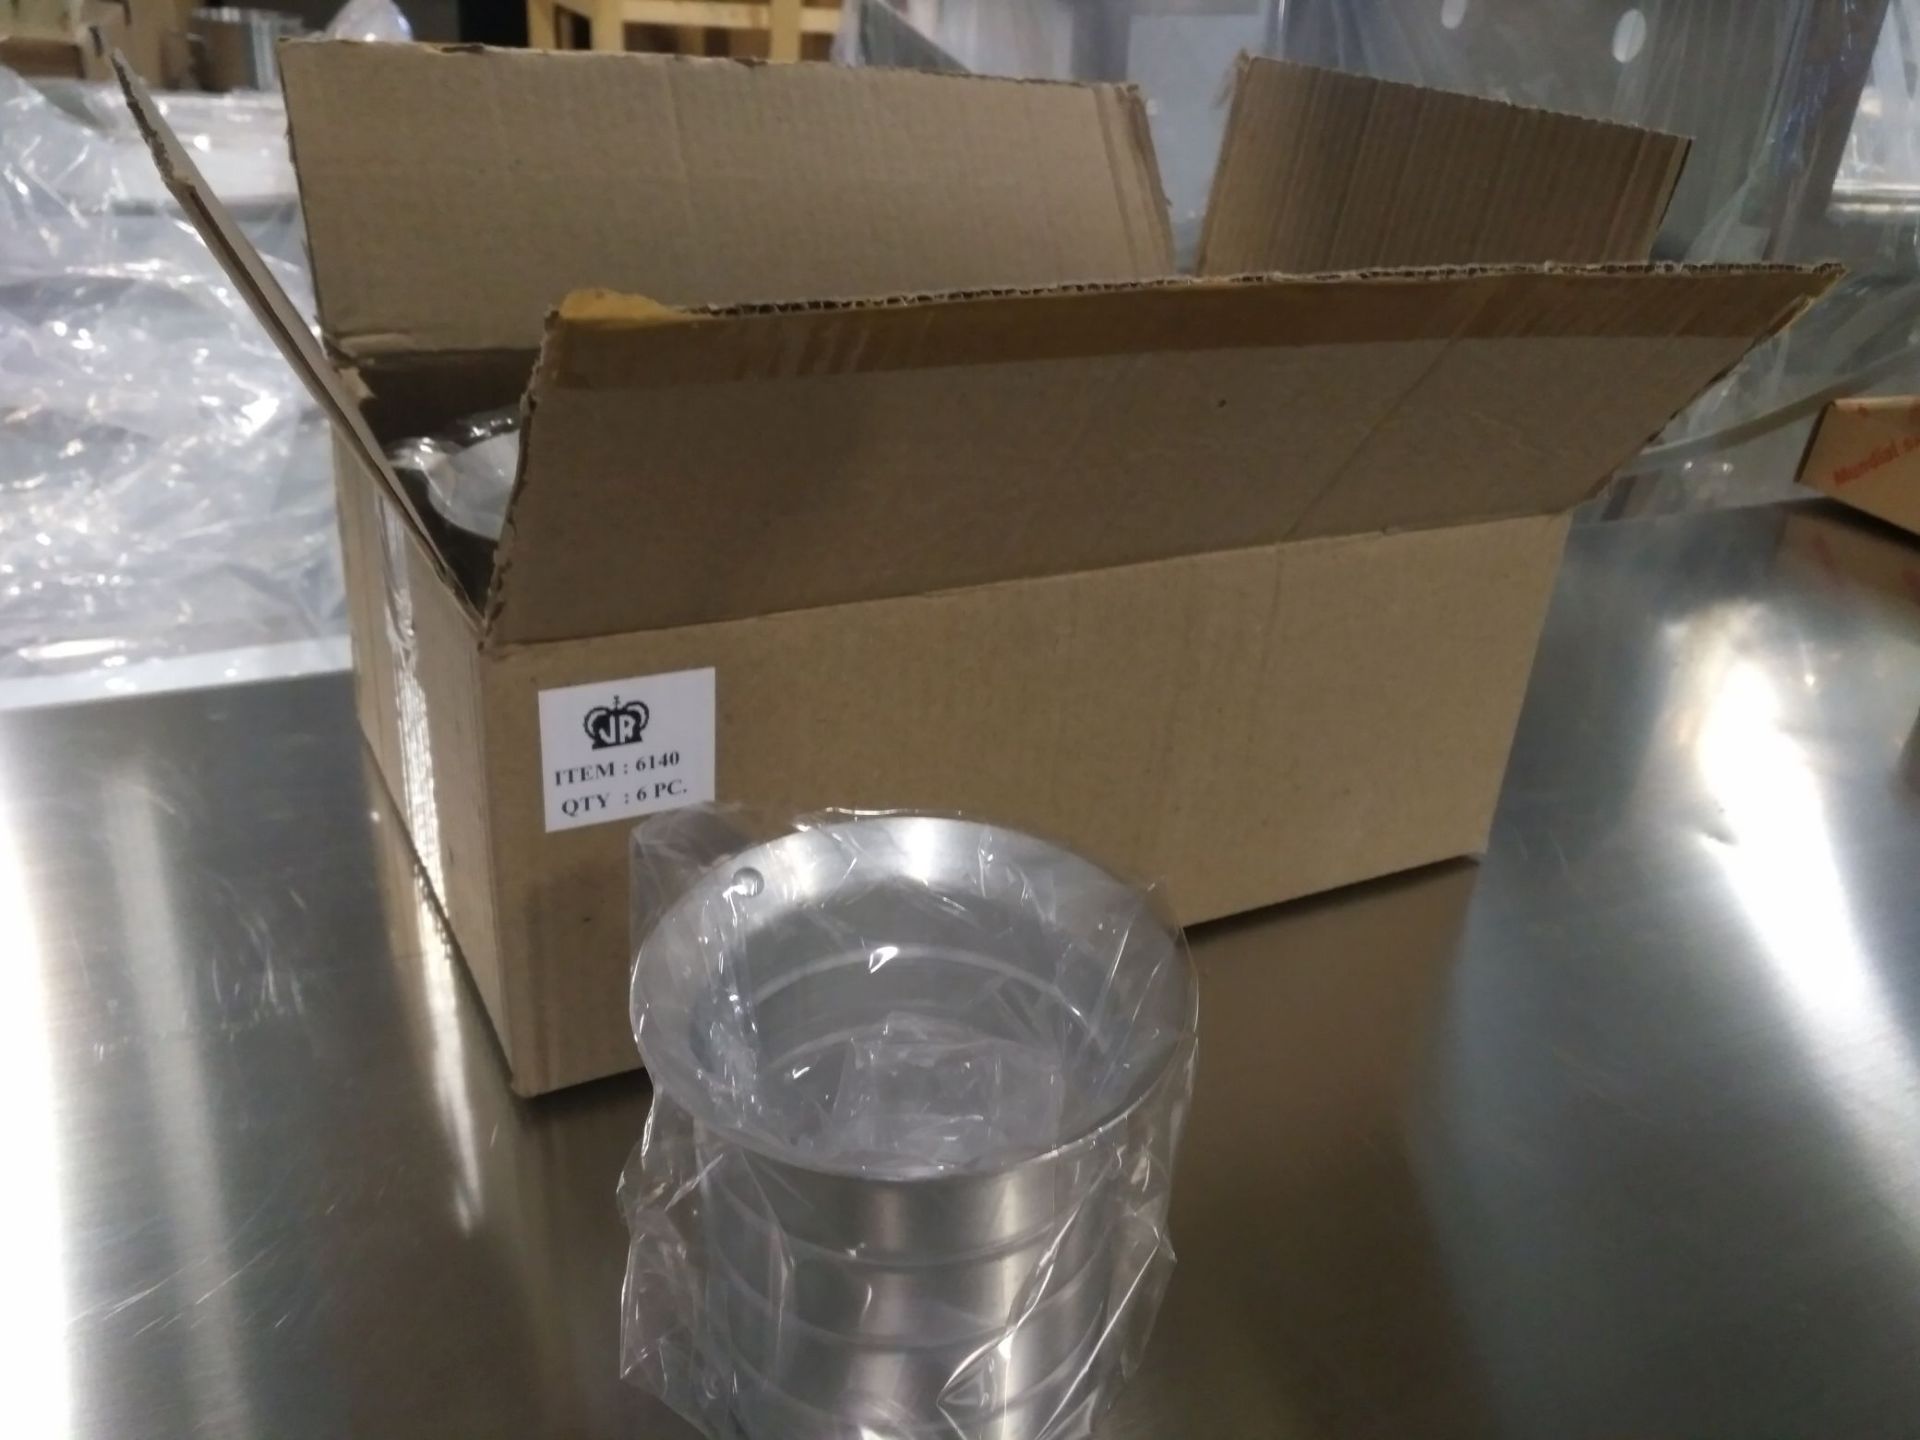 0.5qt Aluminum Bakers Wet Ingredient Measures, JR 6140 - Lot of 6 - Image 2 of 3